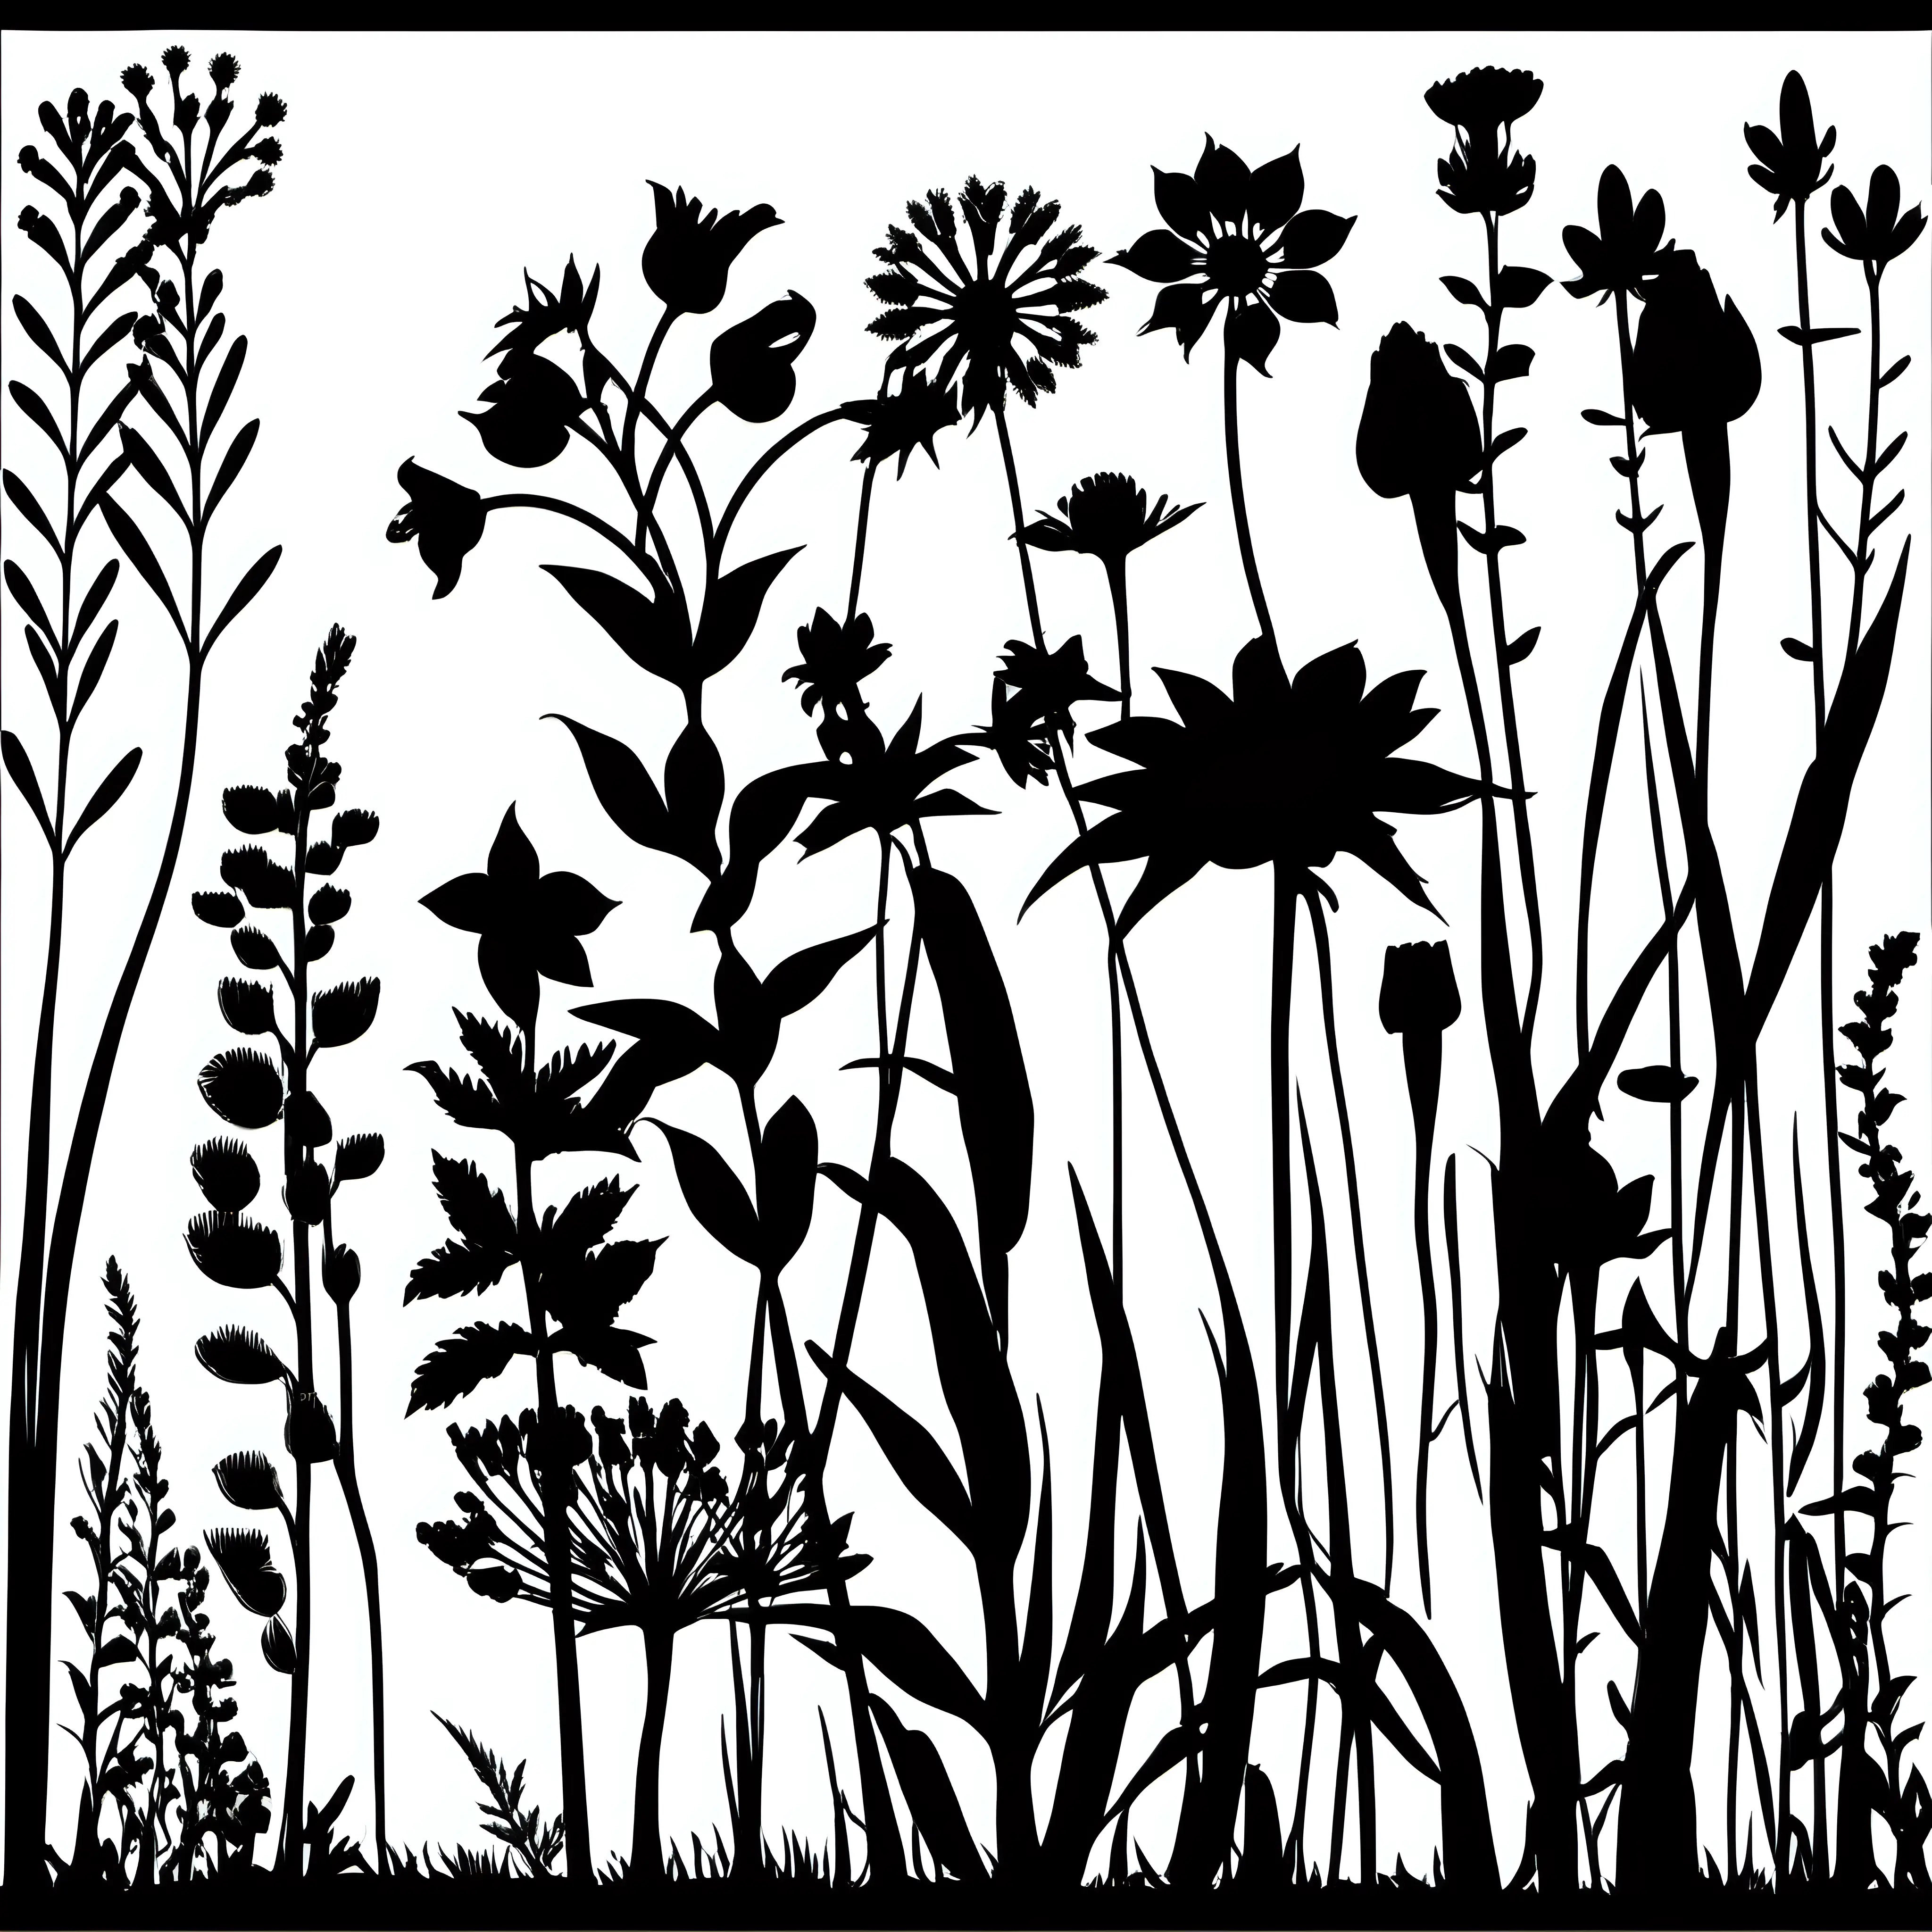 Silhouette Wildflowers at Dusk Serene Nature Landscape Art